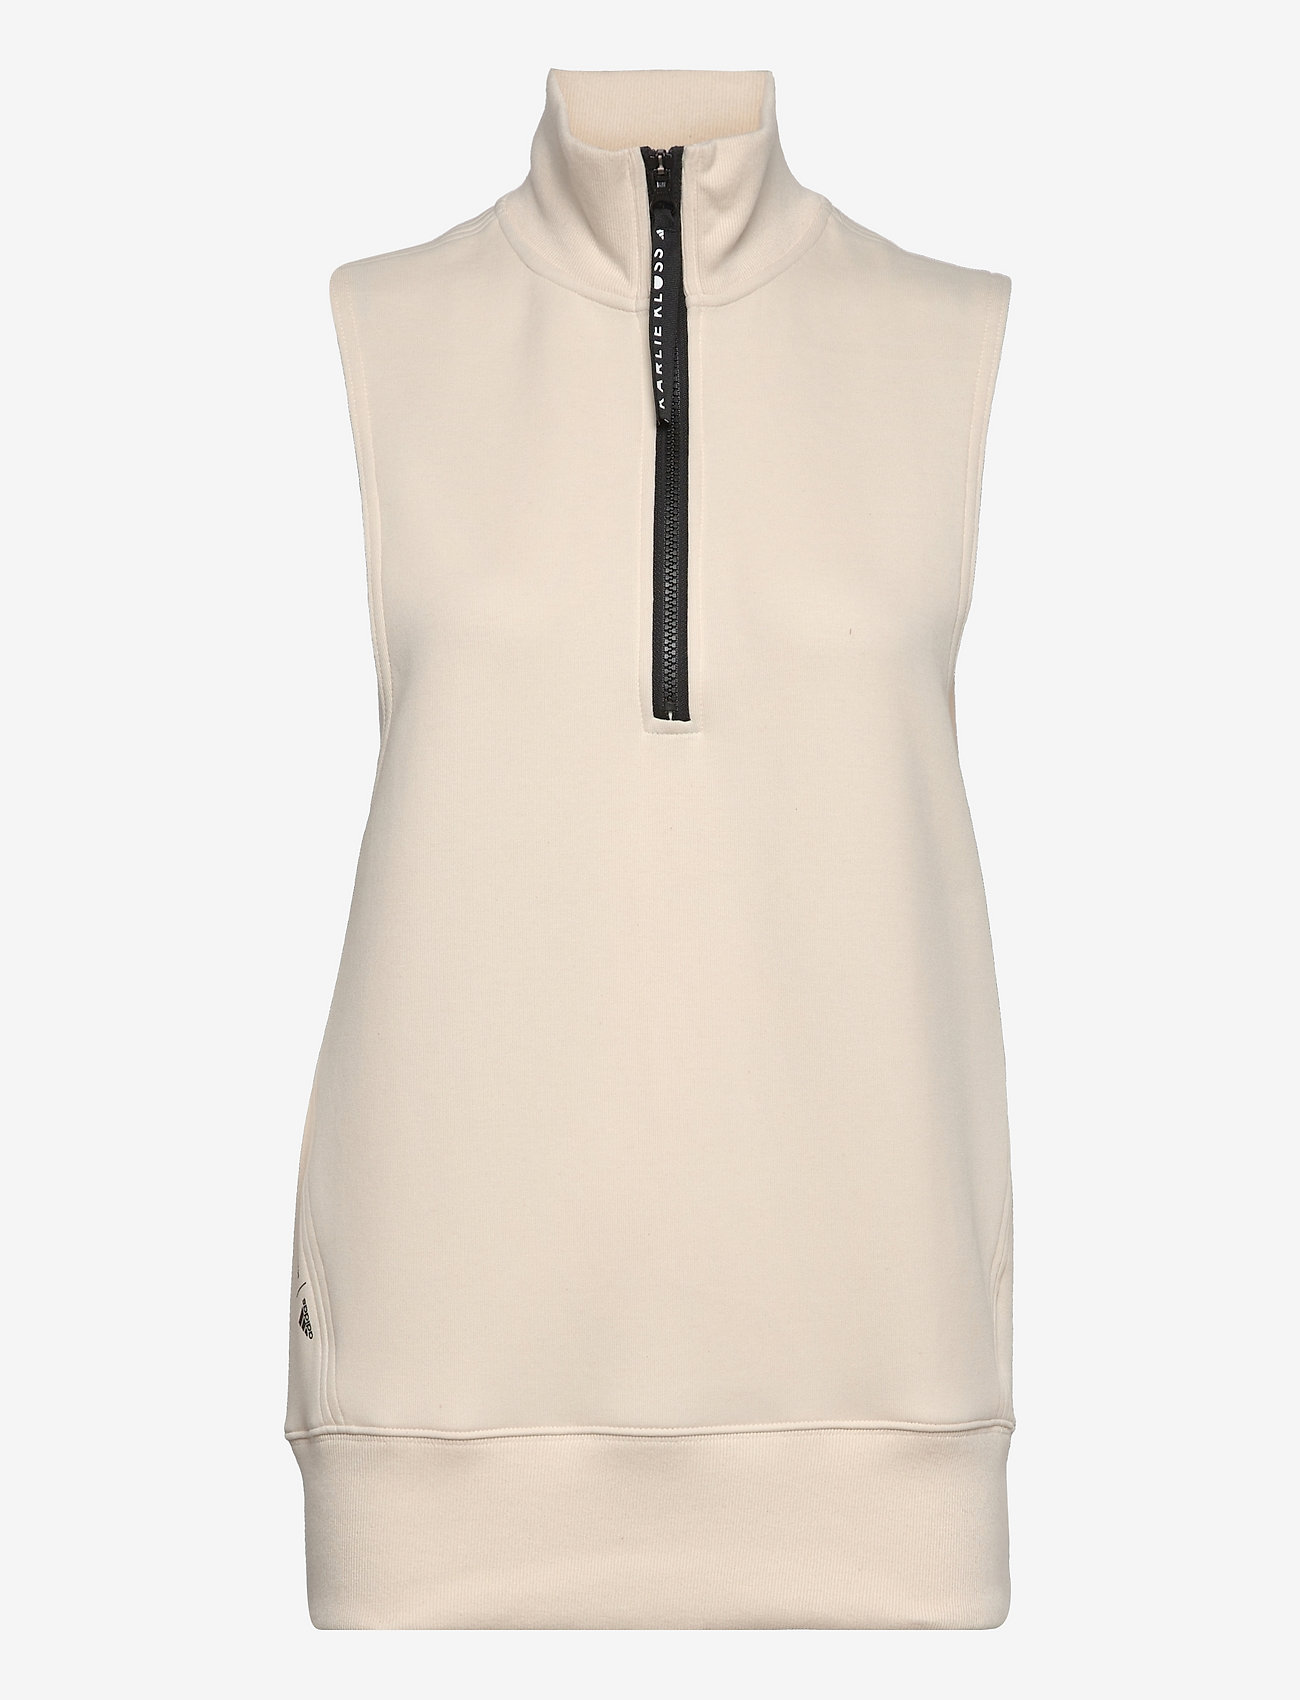 adidas Performance - Karlie Kloss Oversize Vest W - damen - nondye - 0